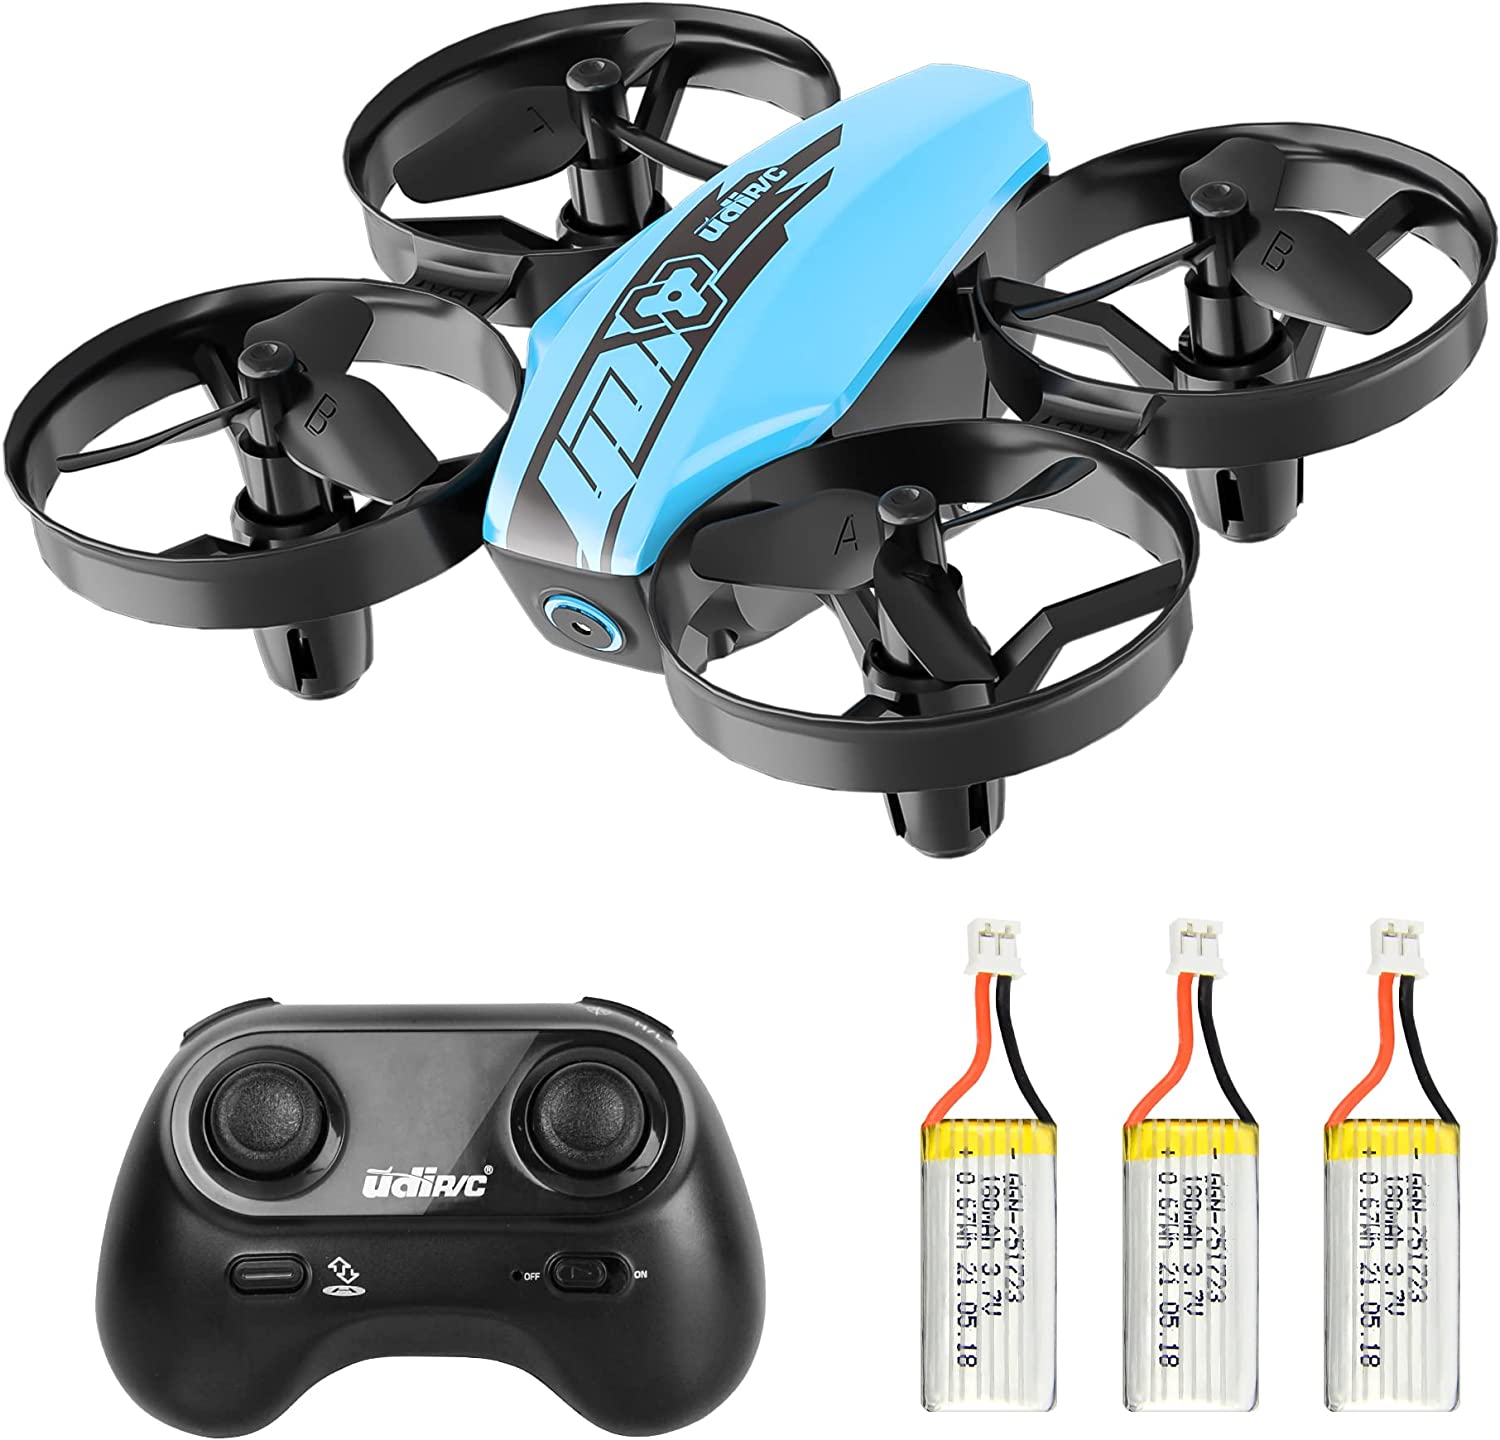 UDI U46 Mini Drone for Kids 2.4Ghz RC Drones with Auto Hovering Headless Mode Nano Quadcopter, Blue